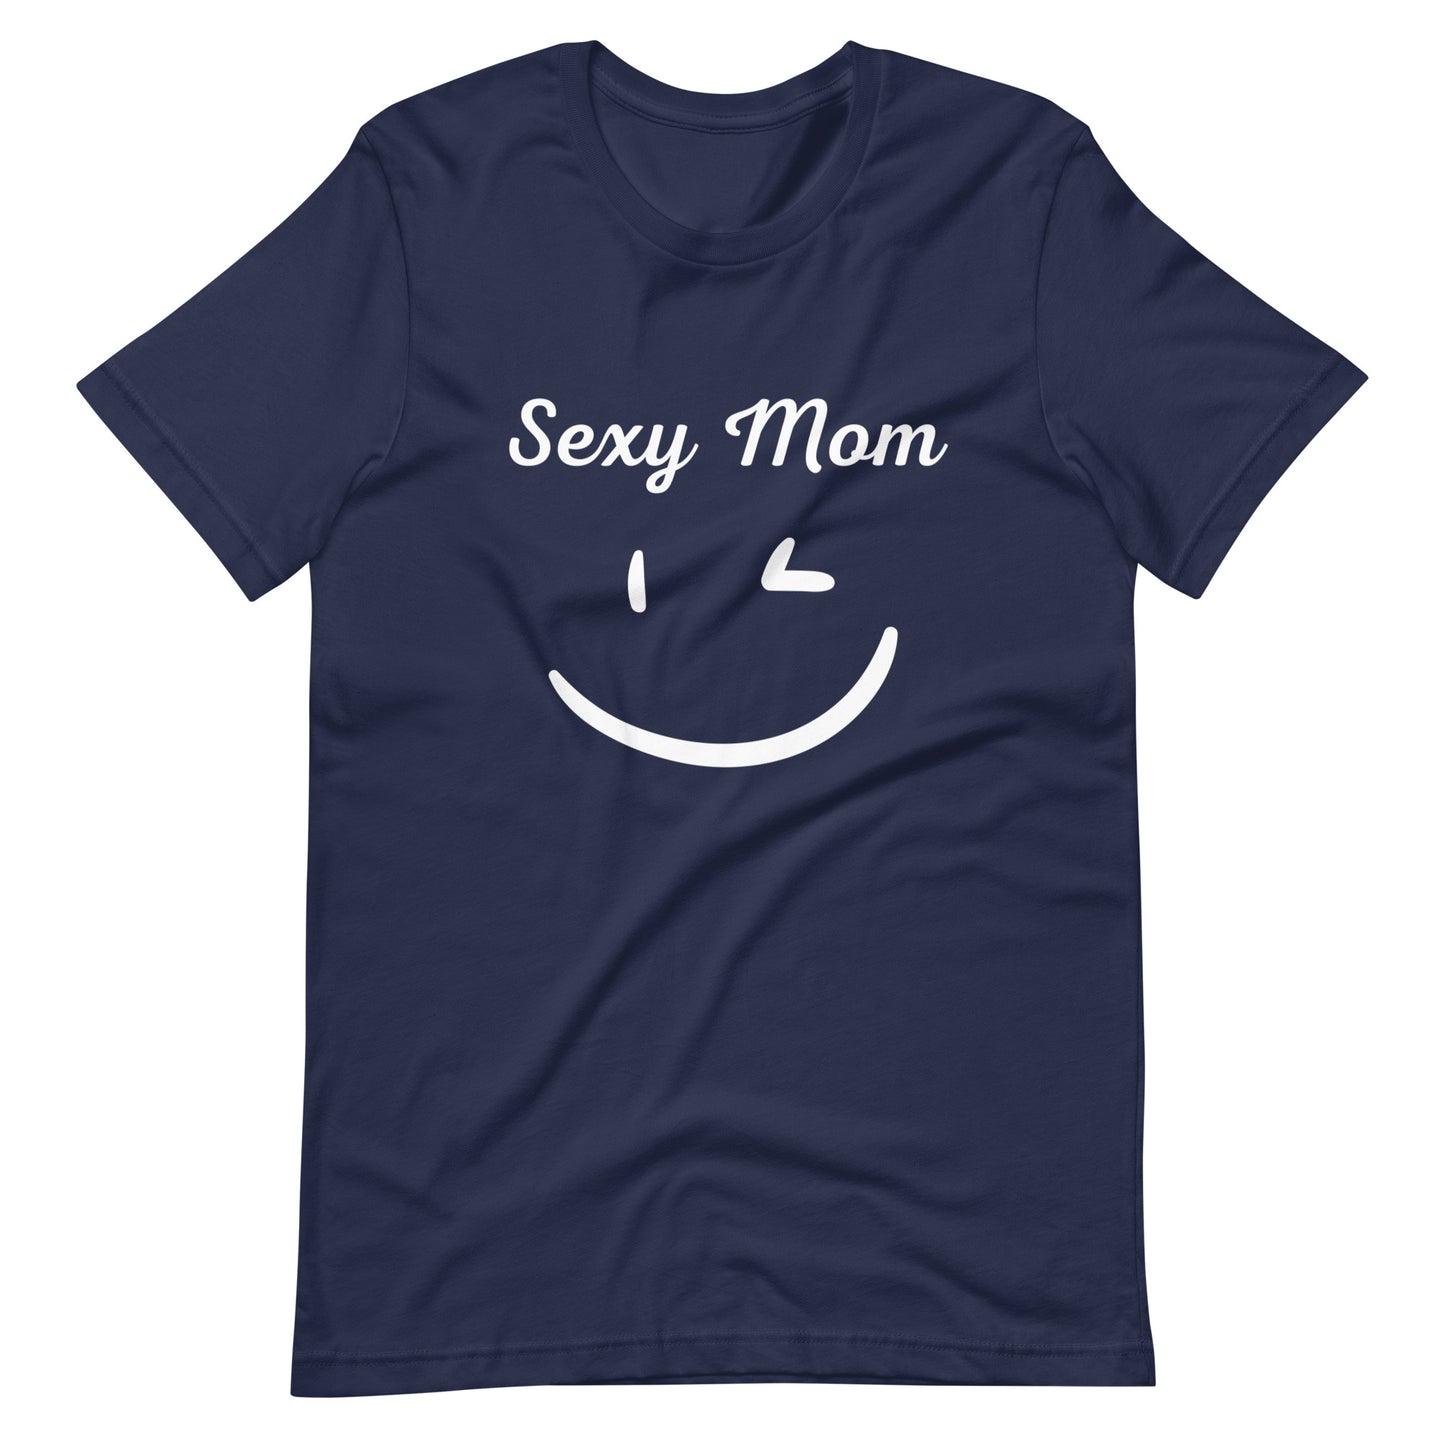 Sexy Mom t-shirt